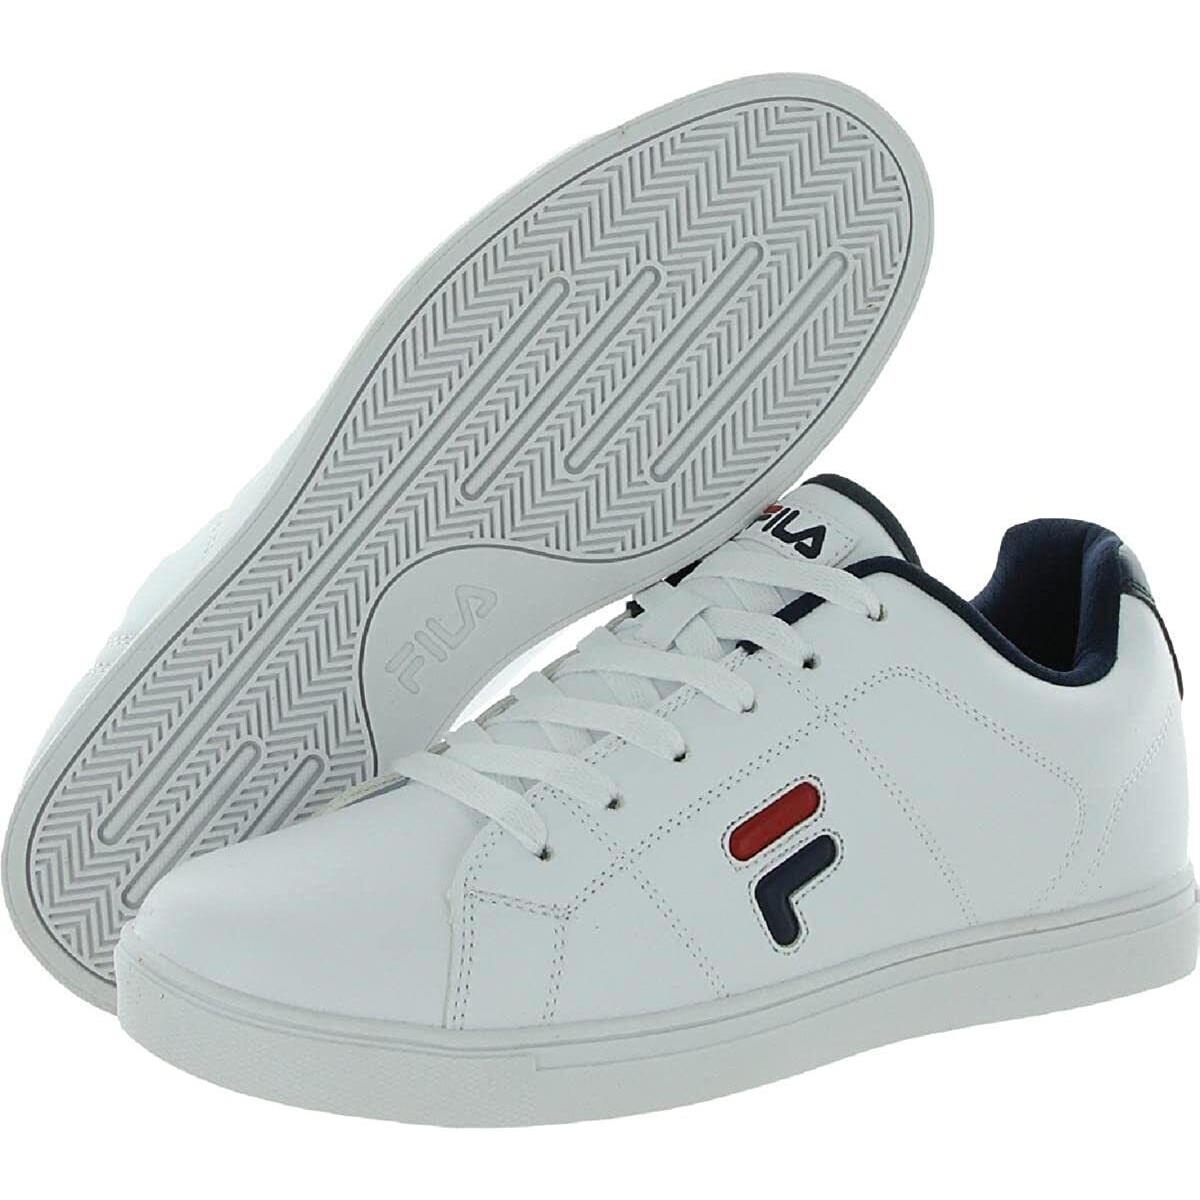 Man Fila Charleston Lifestyle Low Top Fashion Sneakers 875-125 Color White